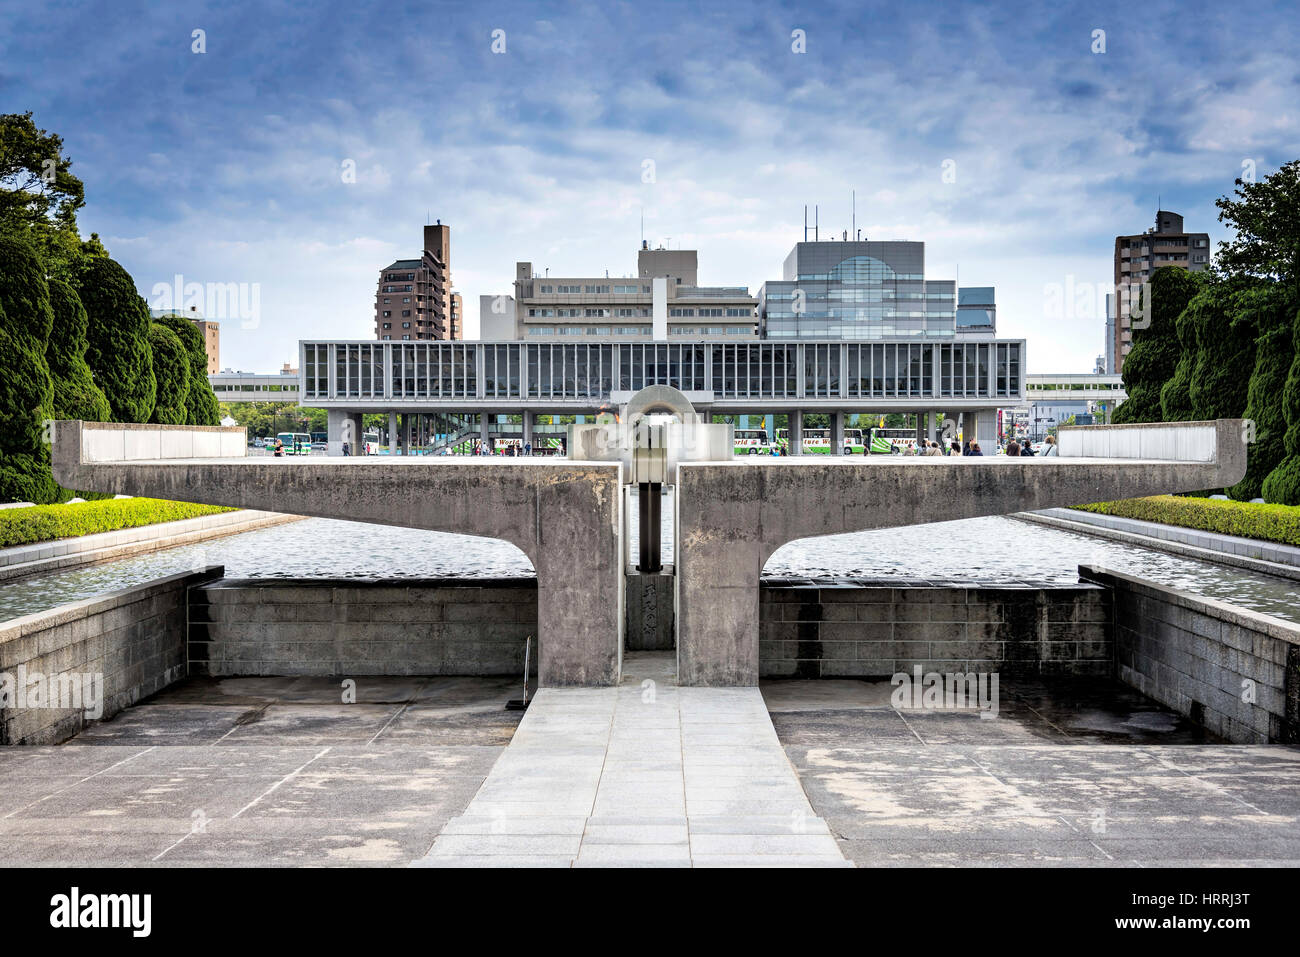 Hiroshima, Japan - April 27, 2014: View of the Hiroshima Peace Memorial Museum behind the Peace Flame Stock Photo